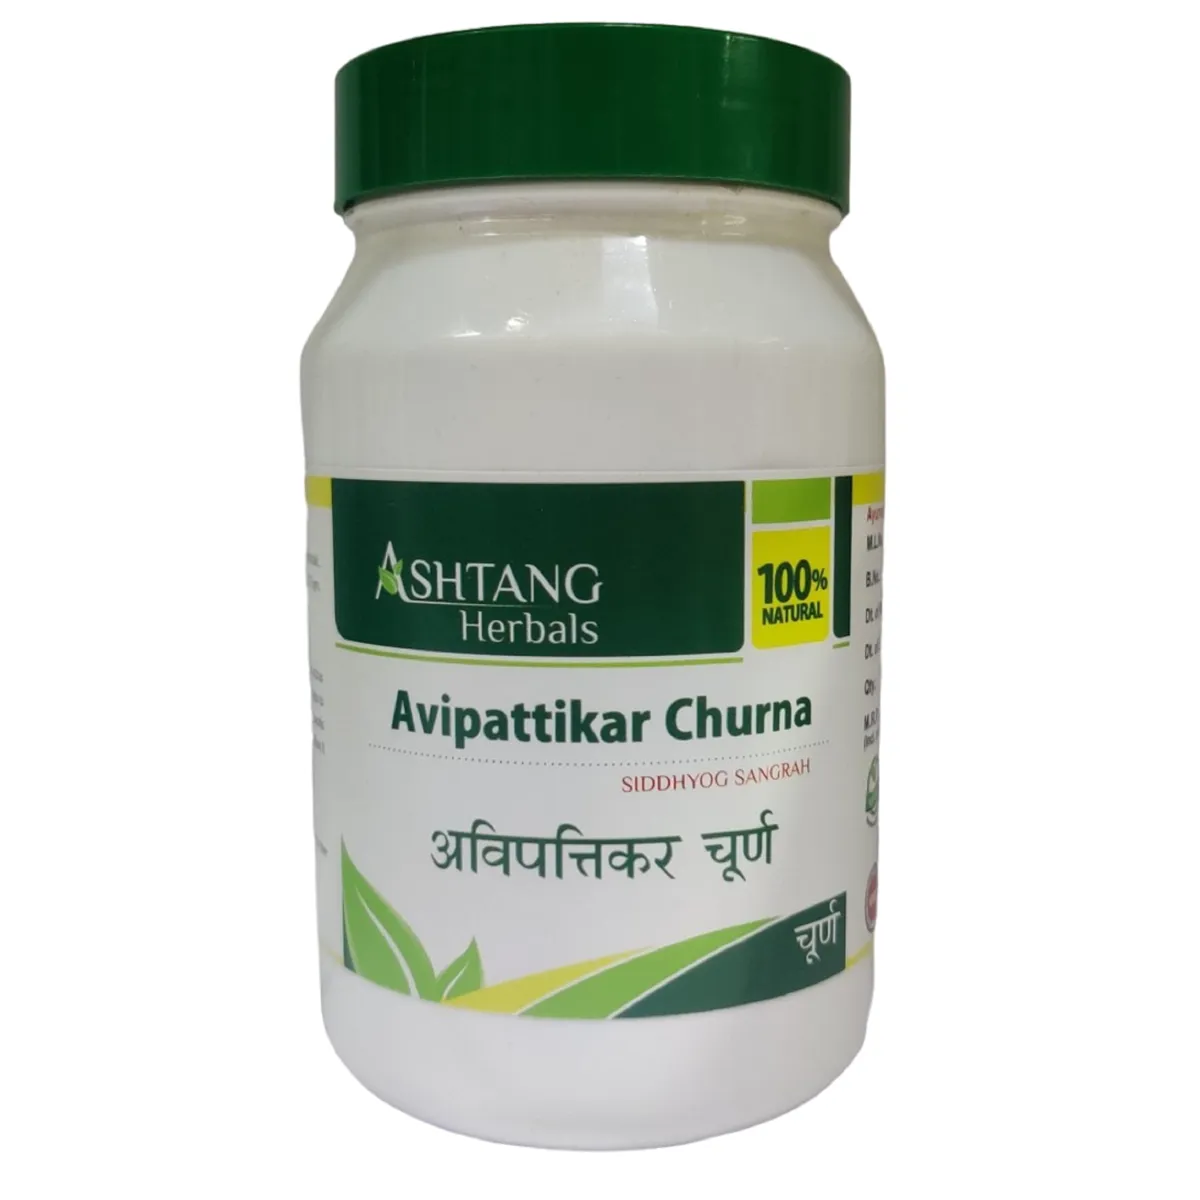 Ashtang Harbals Avipattikar Churna 100g